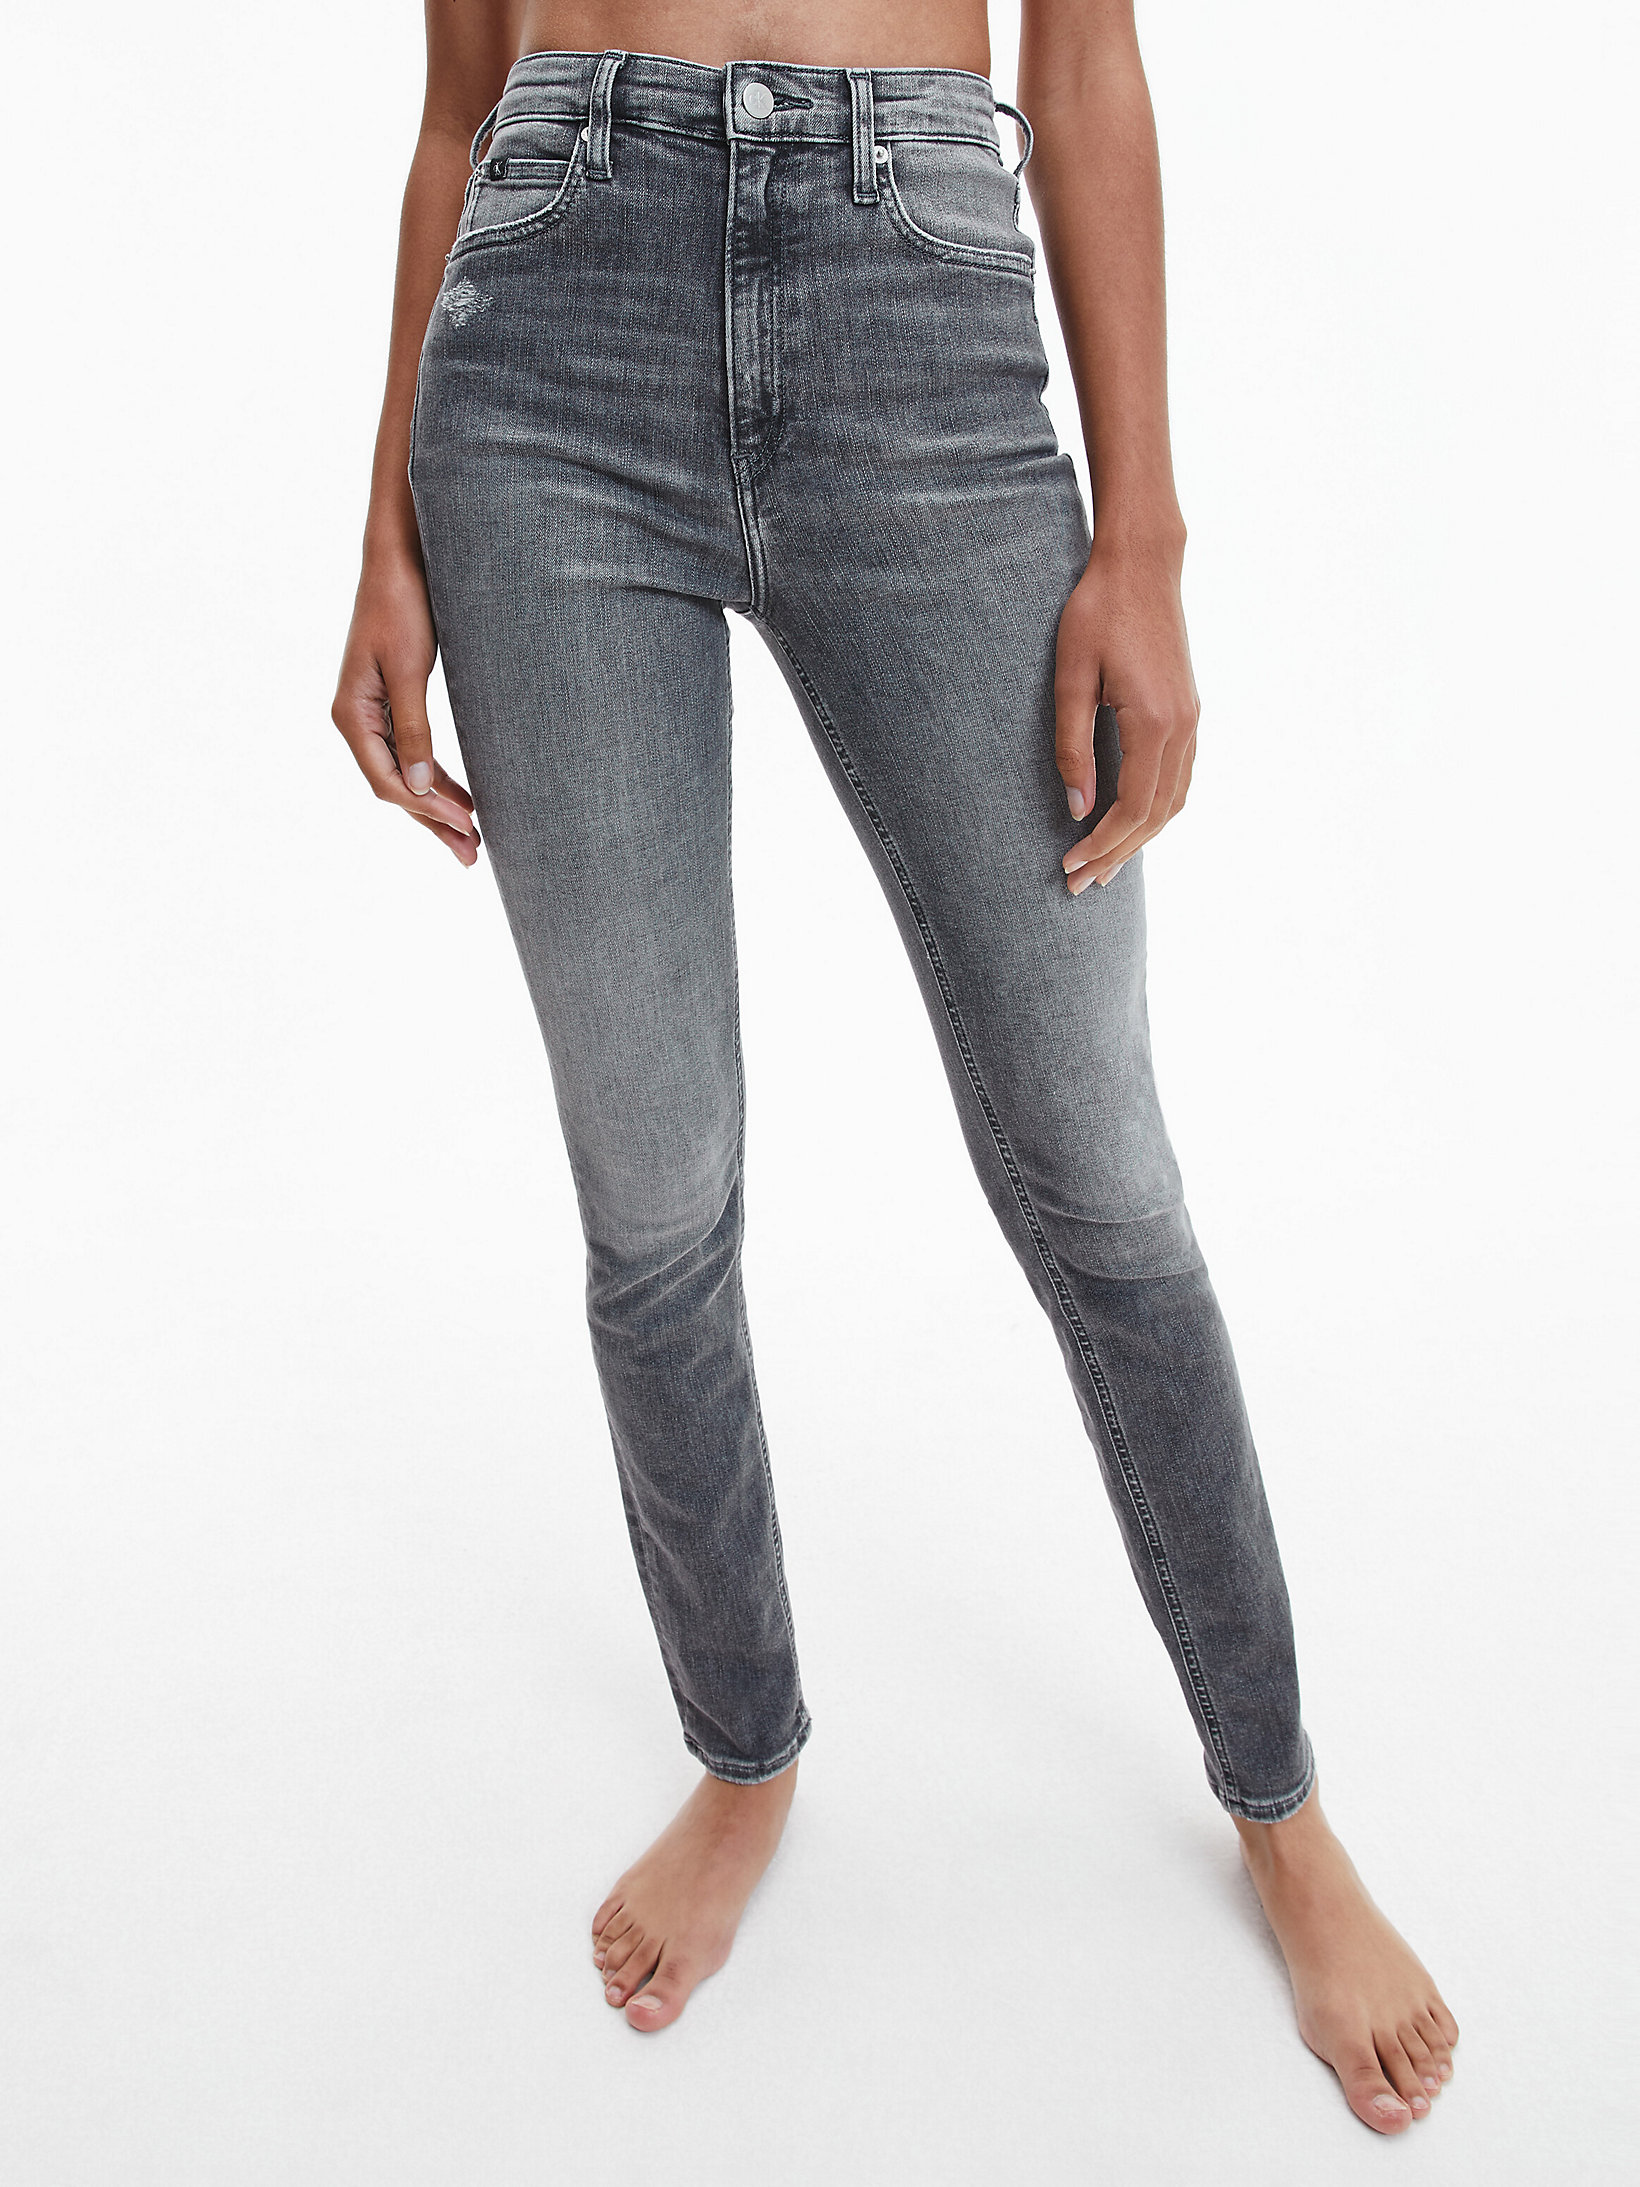 Ladies High Waisted Skinny stretchy Tube Jeans Jegging 4-16 UK size